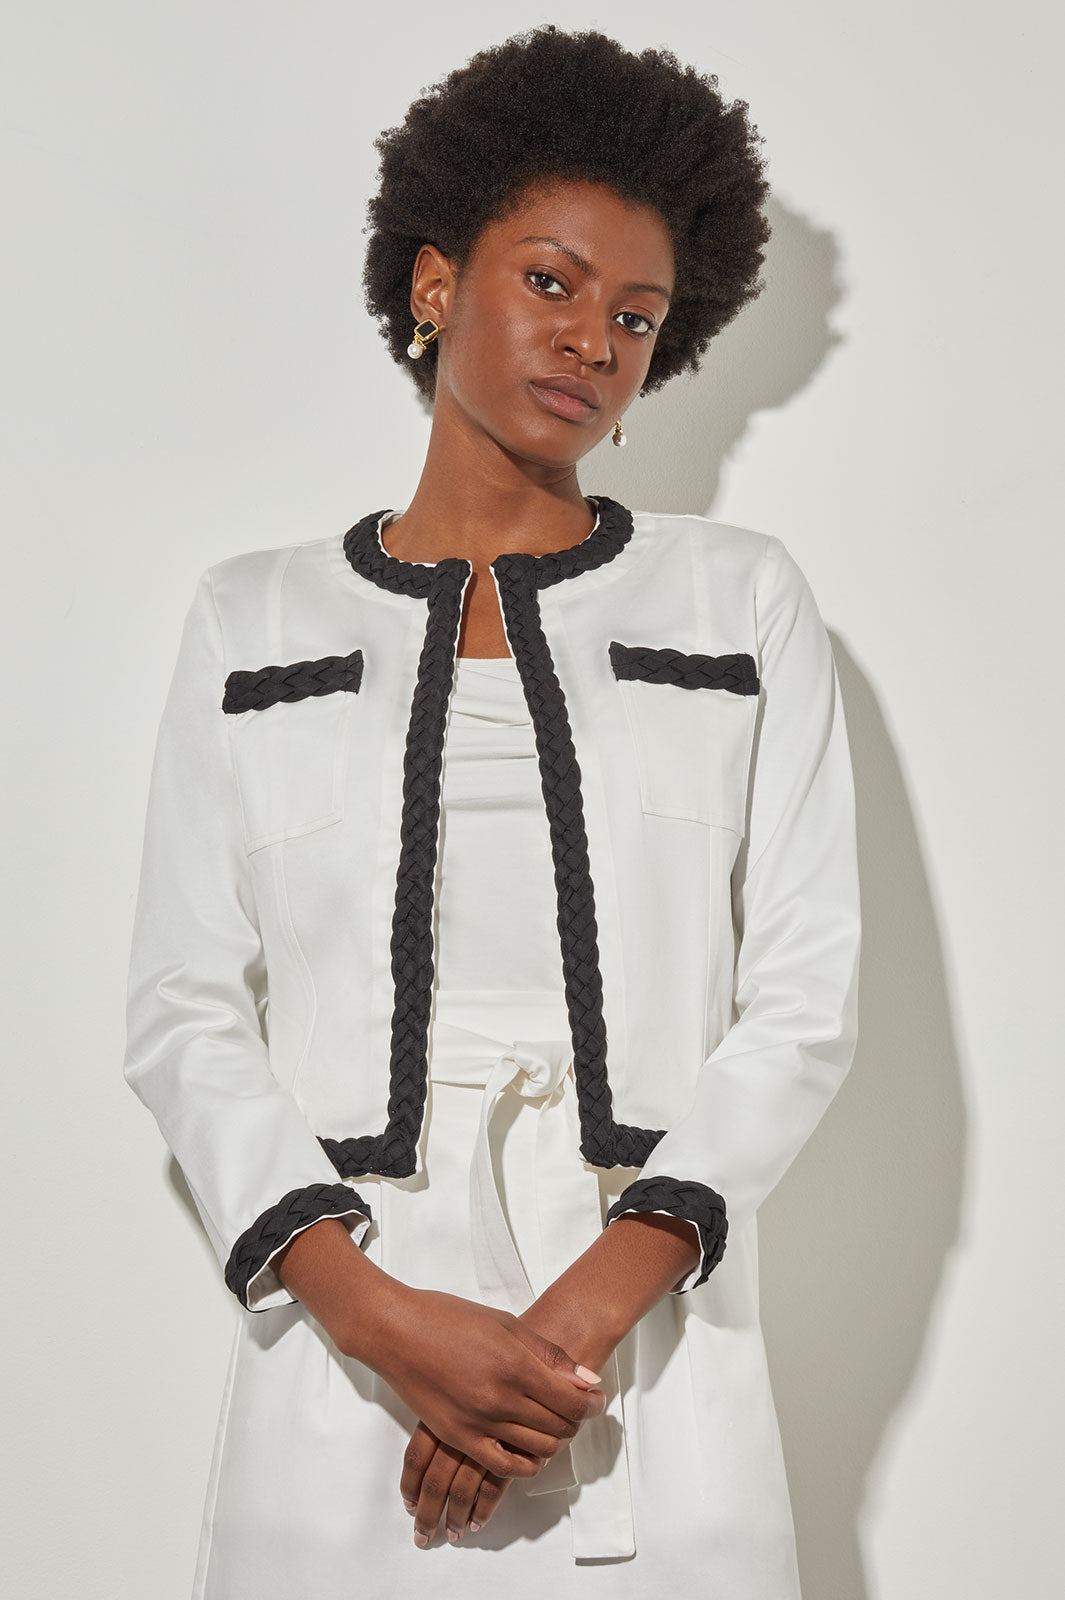 Contrast Trim Textured Knit Jacket